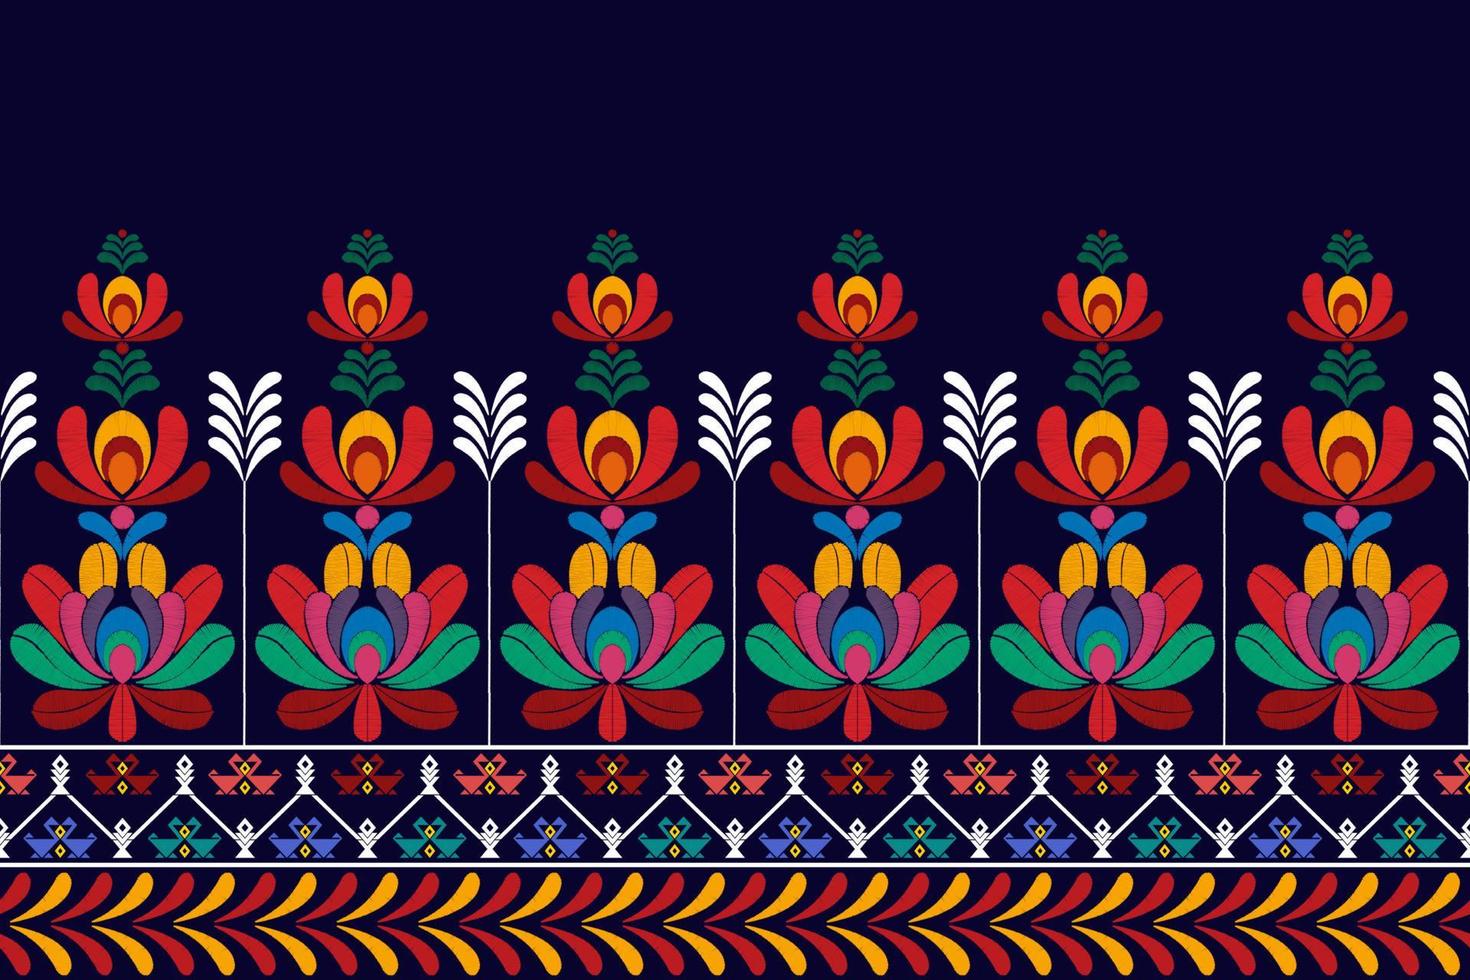 floral húngaro polaco moravo popular étnico diseño de patrones sin fisuras. alfombra de tela azteca boho mandalas decoración textil papel tapiz. vector de bordado tradicional de flor de motivo nativo tribal